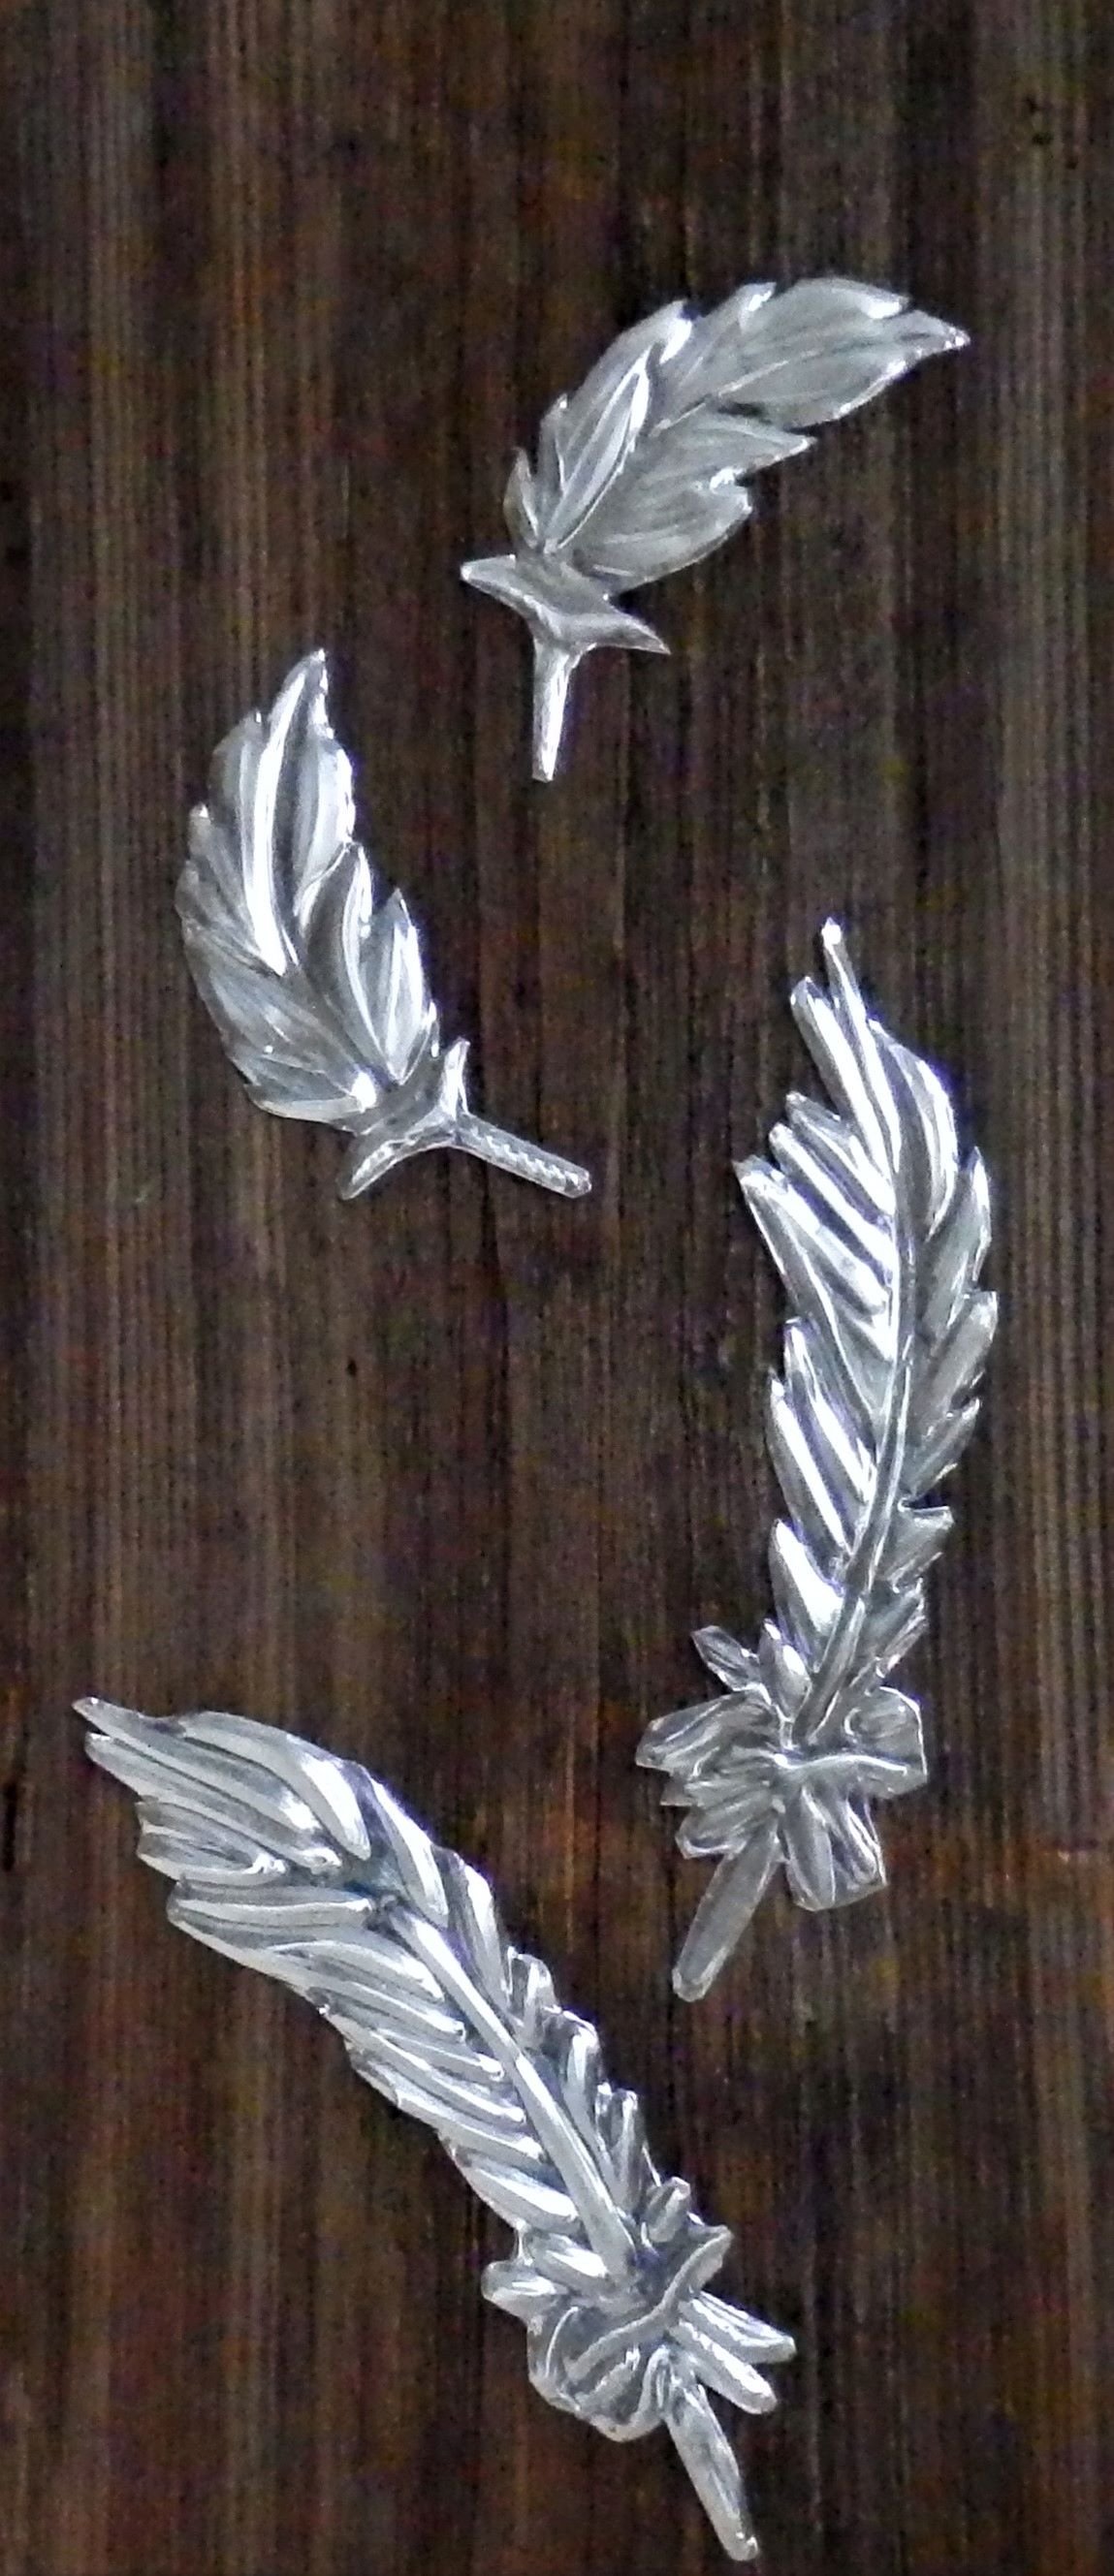 10_Spear_Silver feathers.jpg